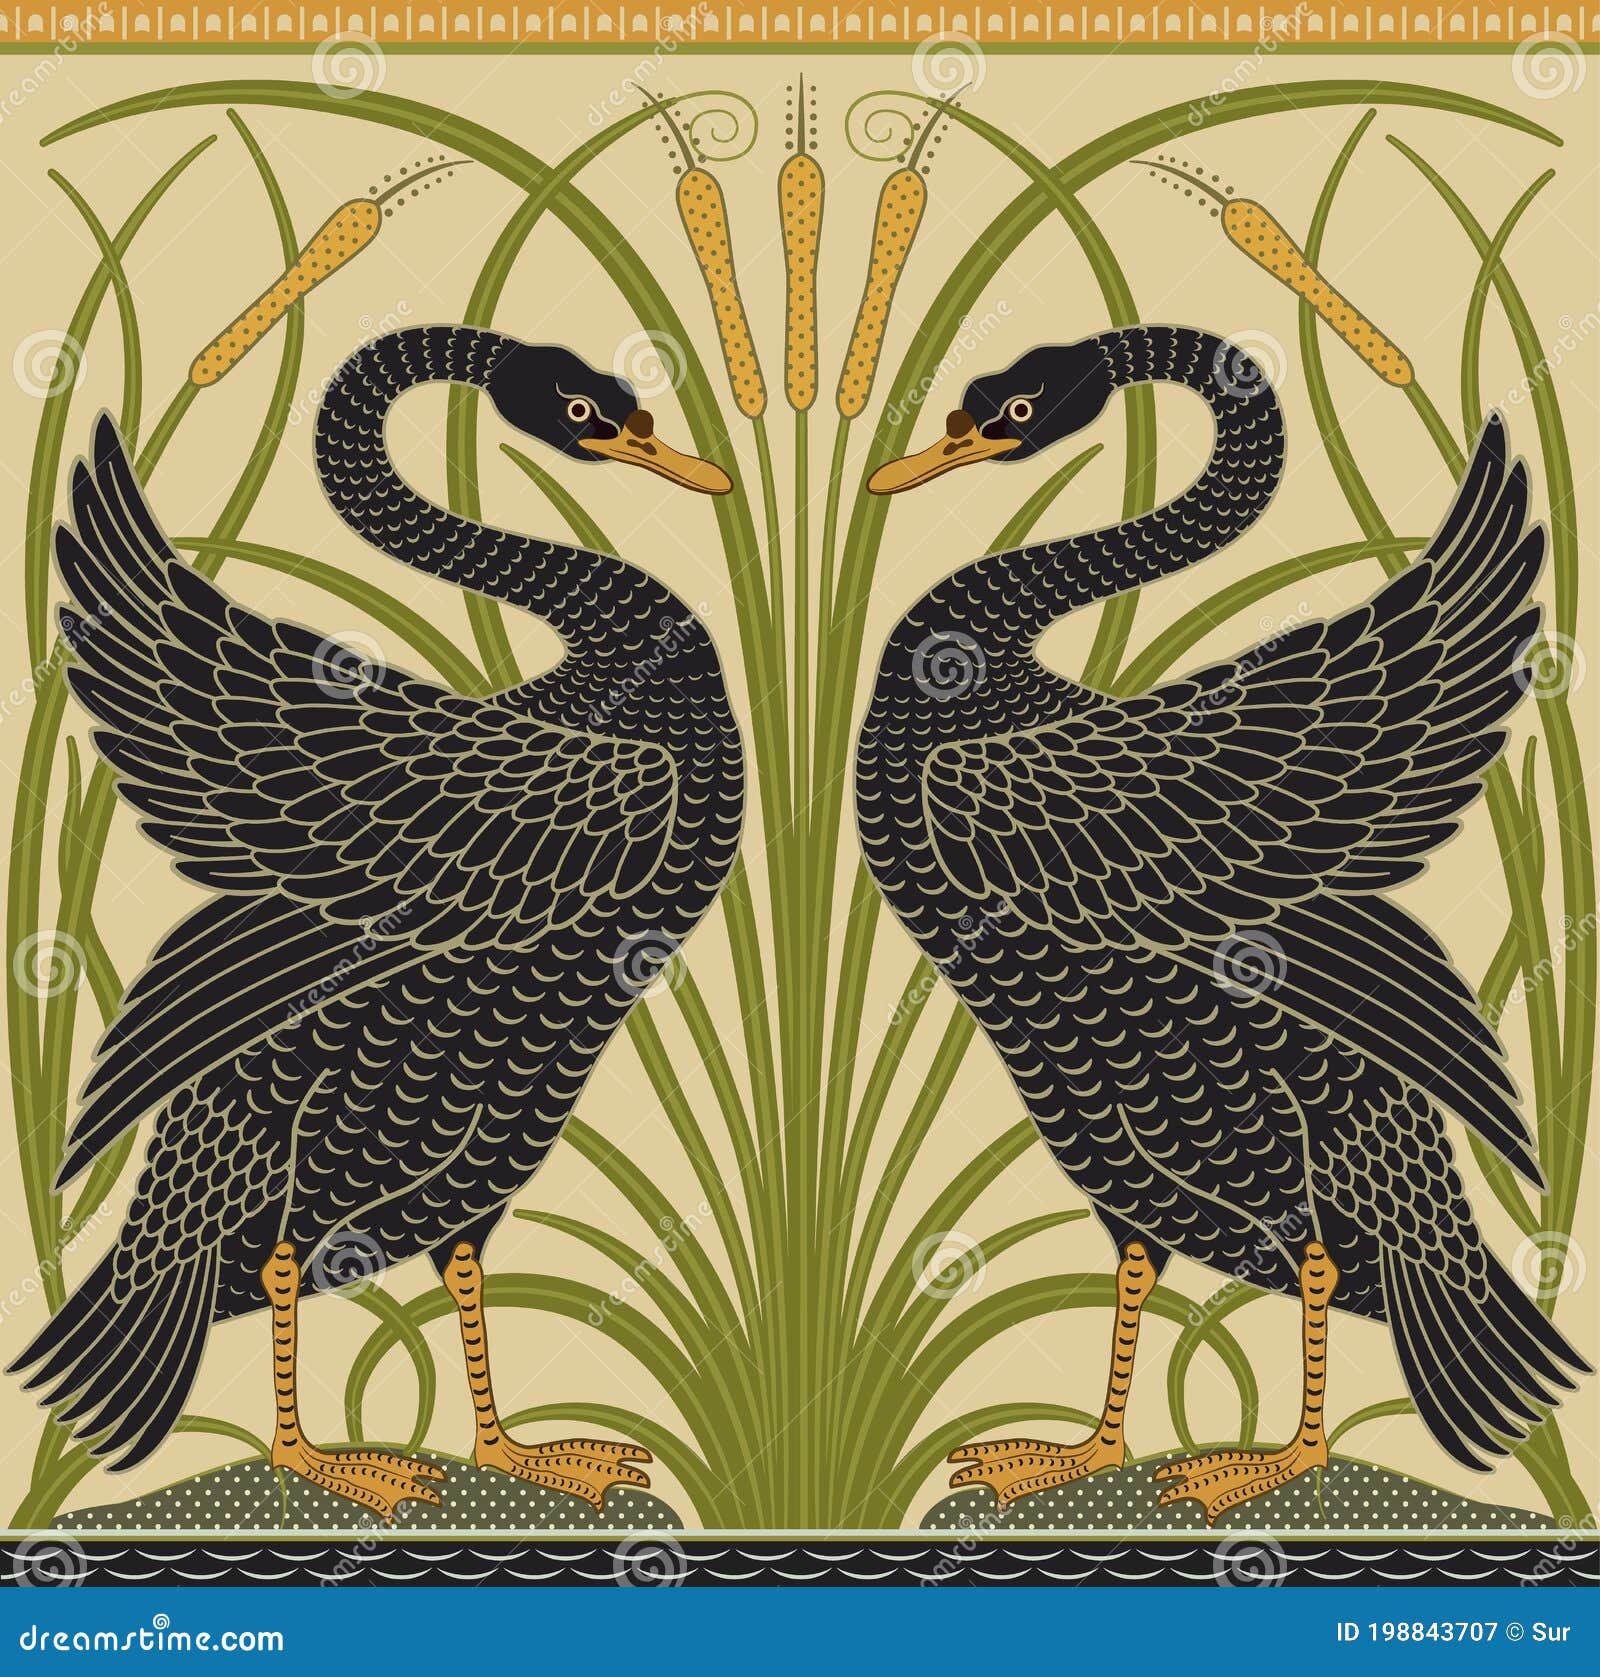 black swan and reeds decorative border pattern on light background.  .